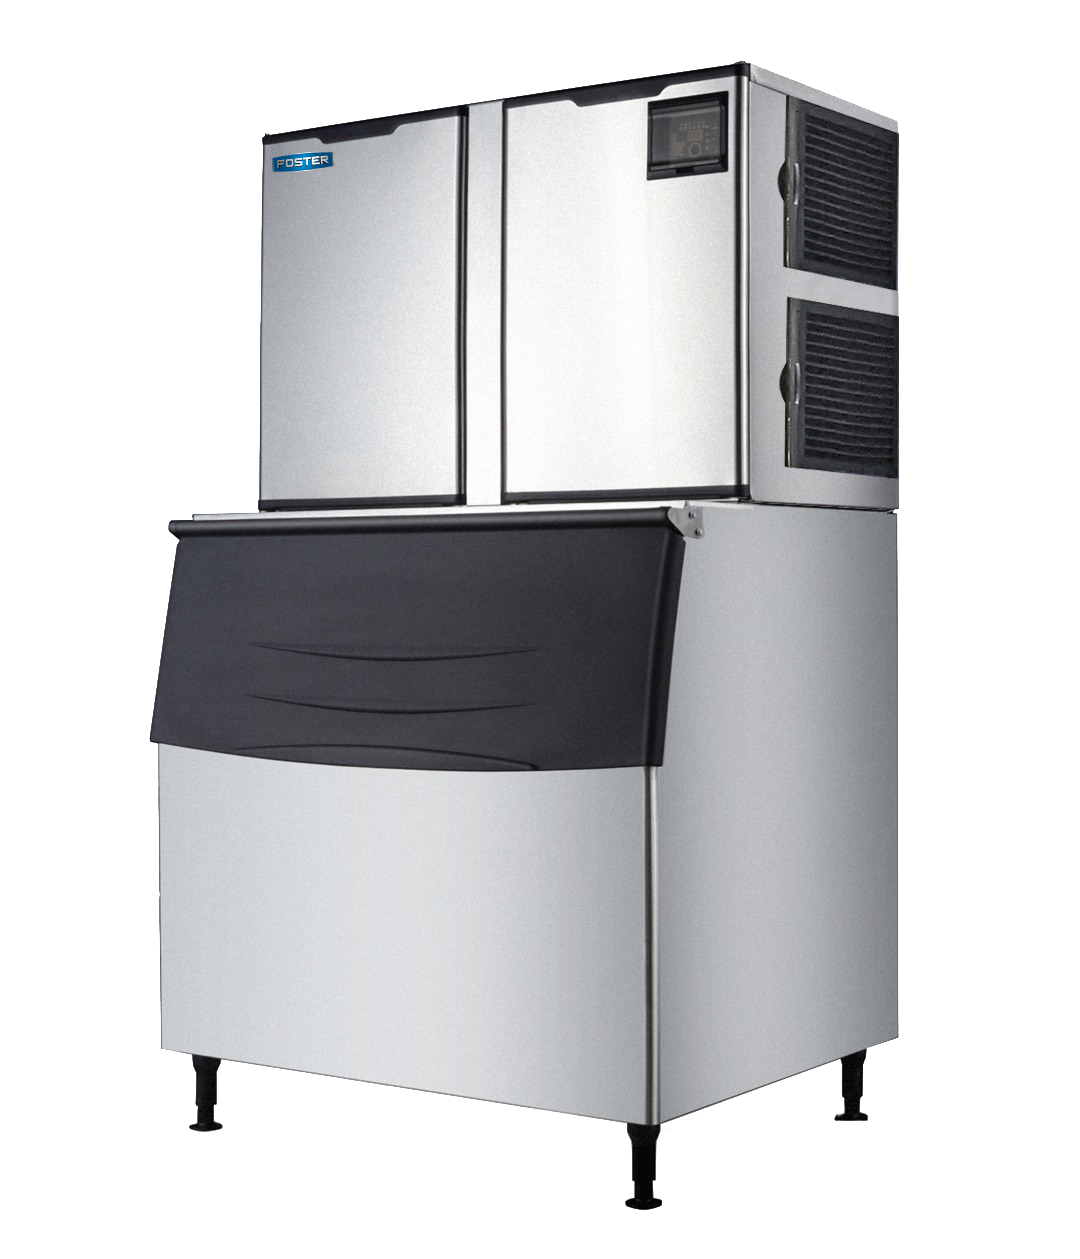 Foster Ice 1500 Lbs. Air- Cooled Ice Machine (Model FIM-1500-F) with 775 Lbs. Bin (B-775)